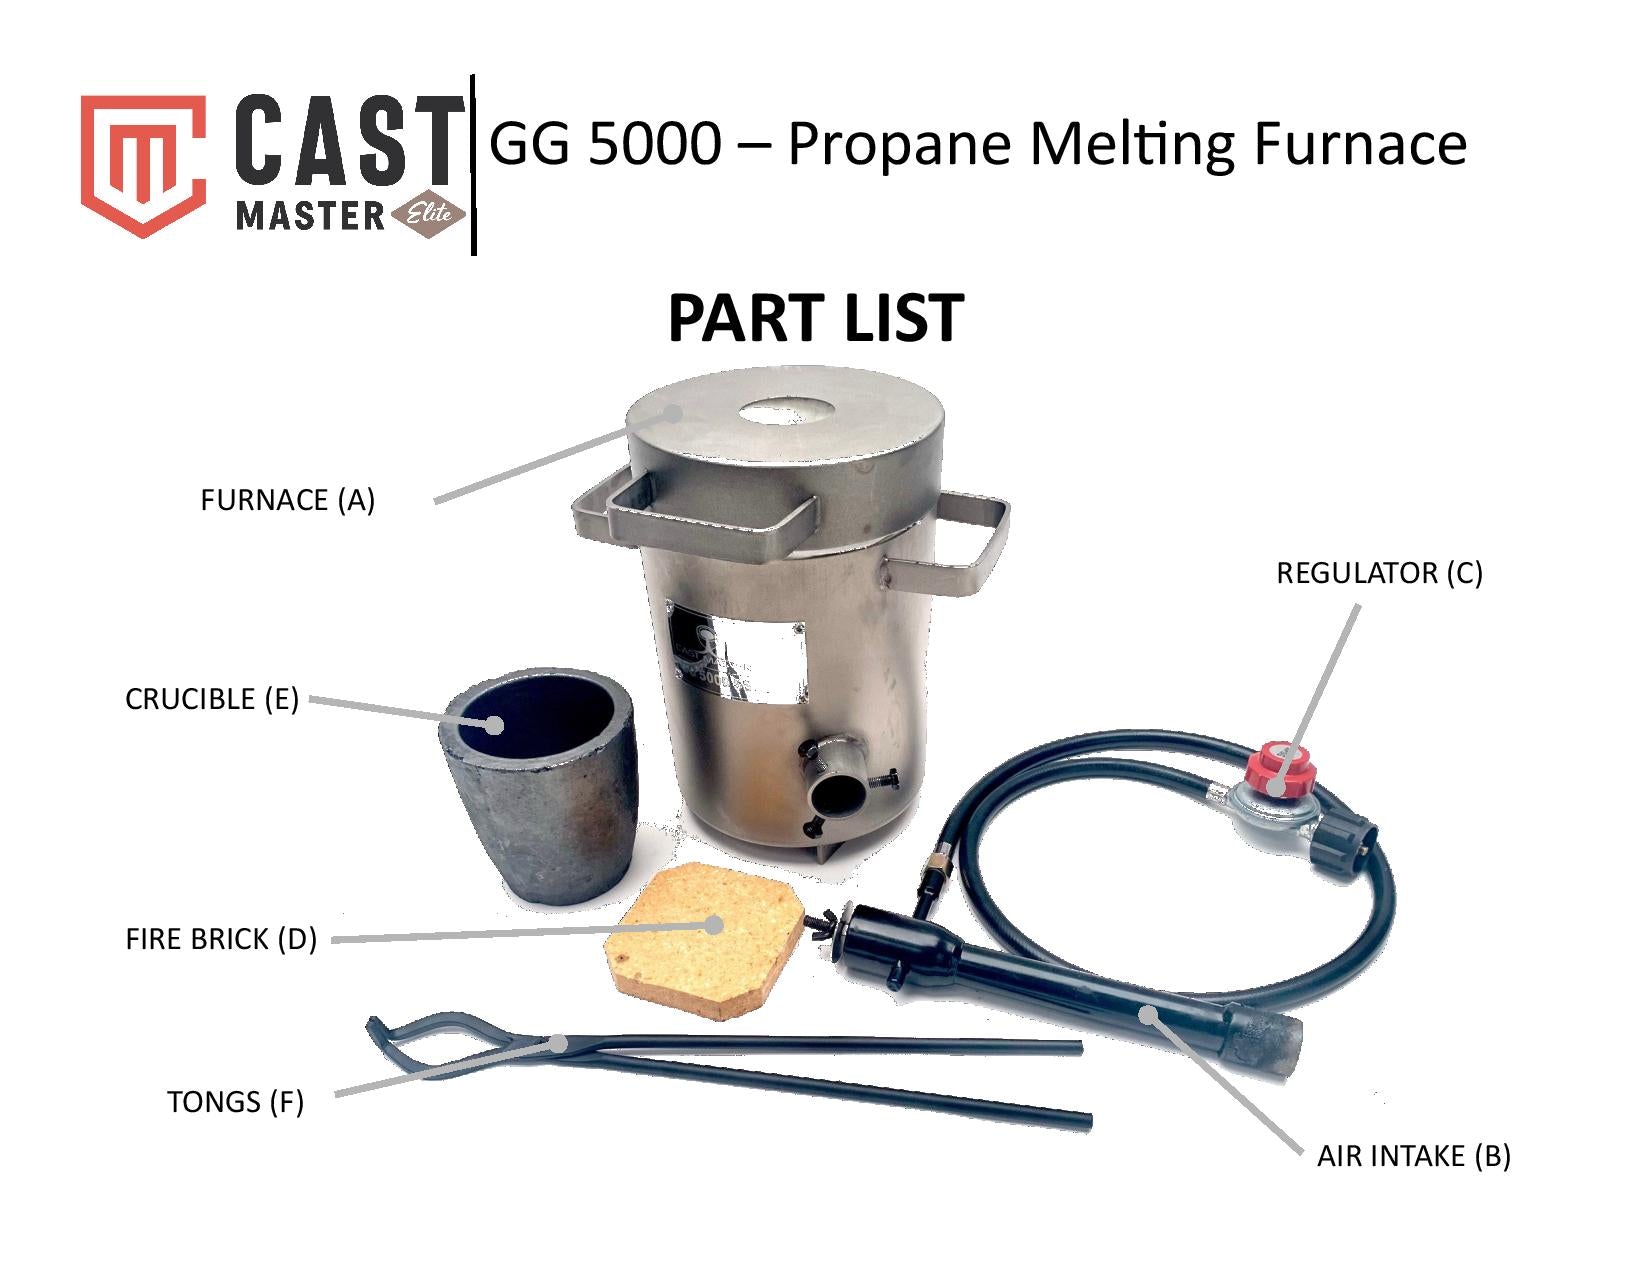 GG-5000 5KG SS Propane Melting Furnace Kit